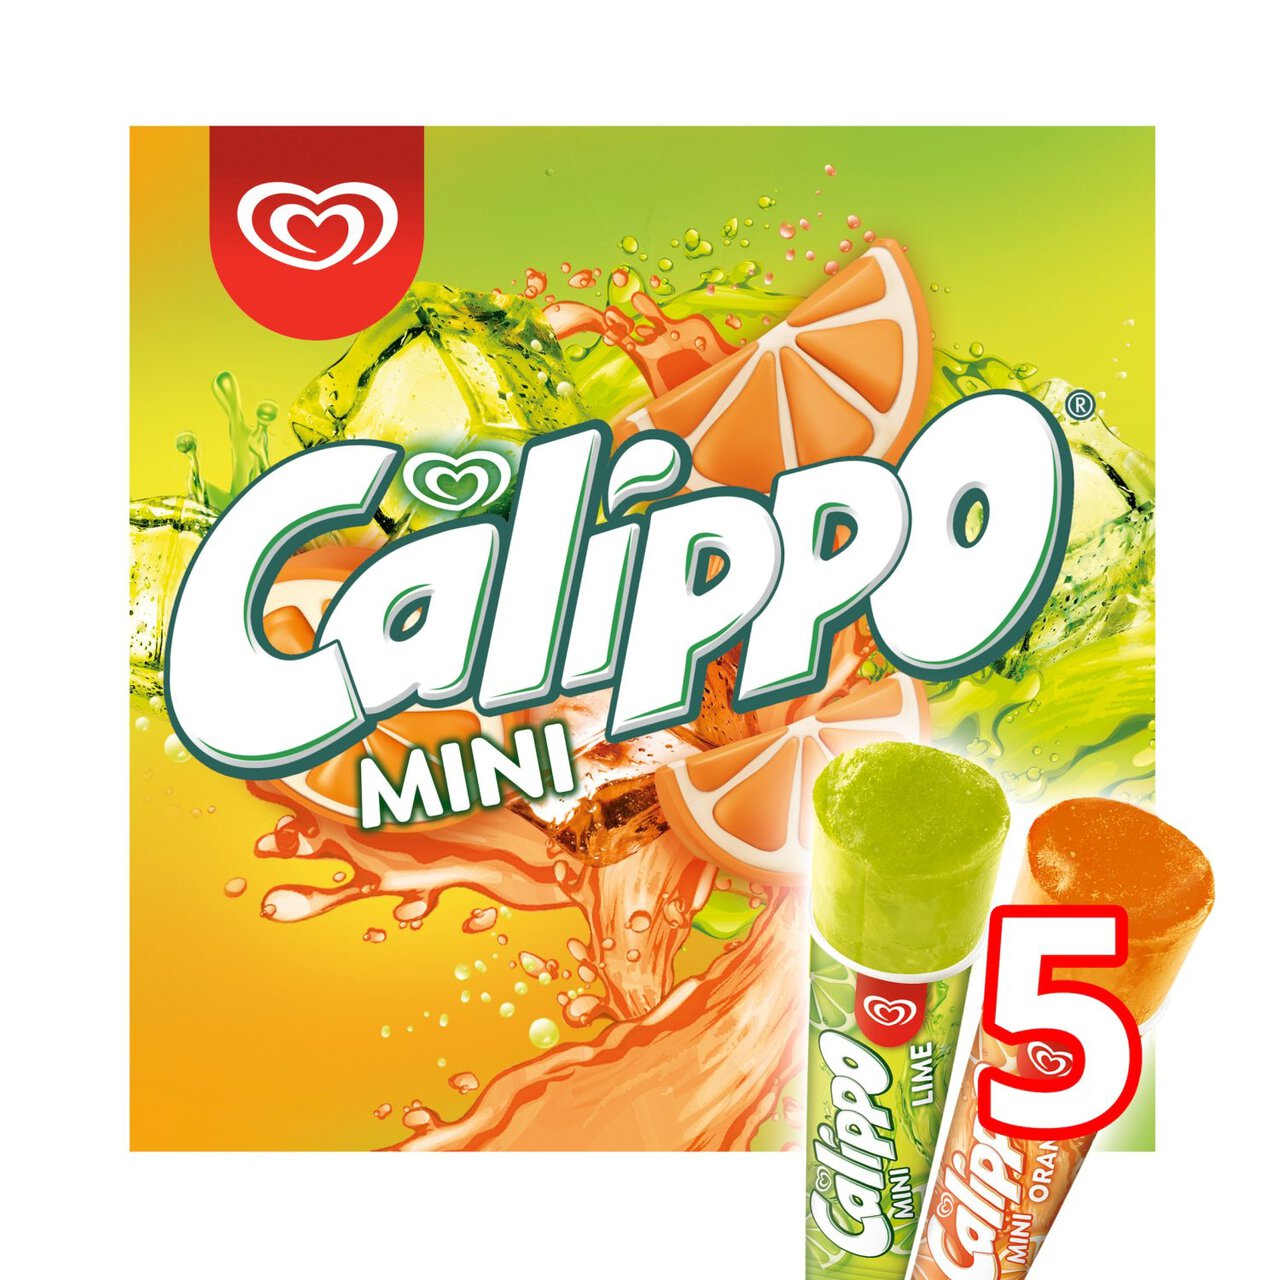 Calippo Orange and Lime Ice Lollies 5 x 80ml